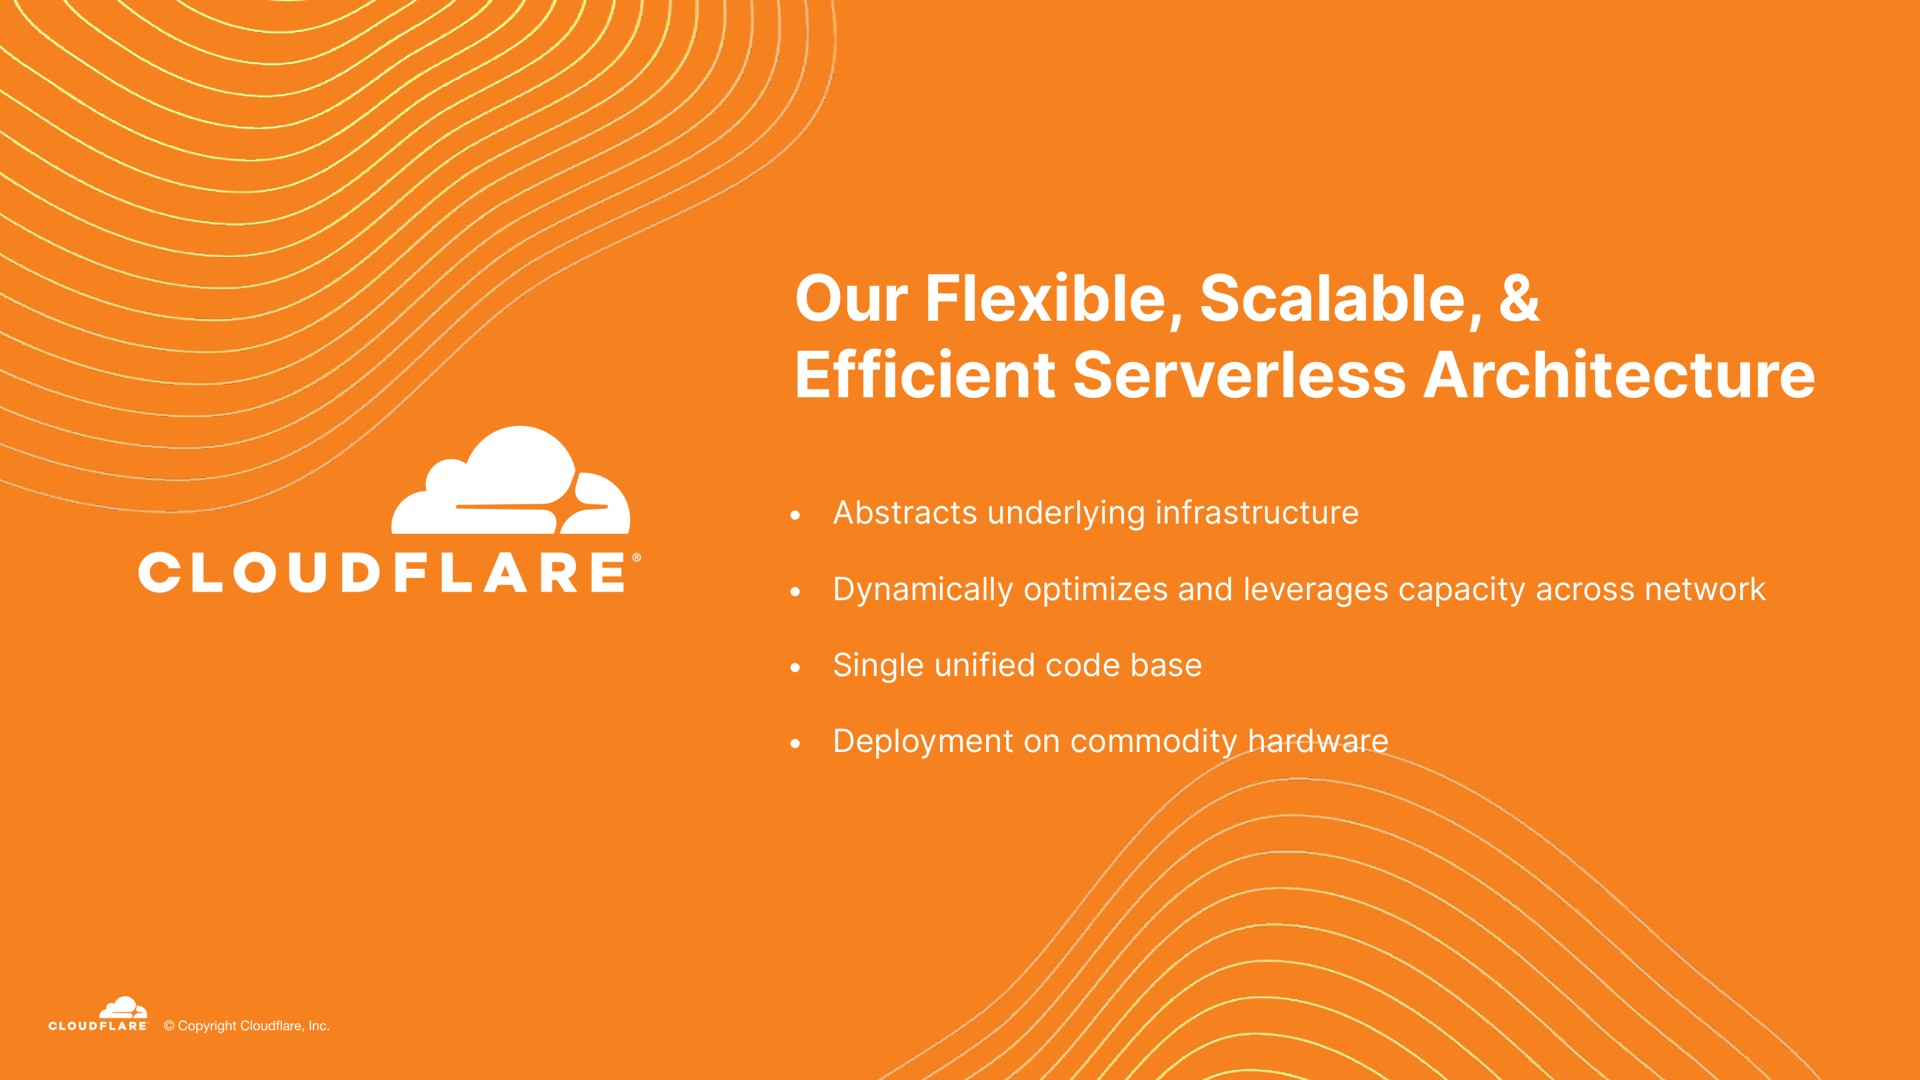 our flexible scalable efficient architecture | Cloudflare